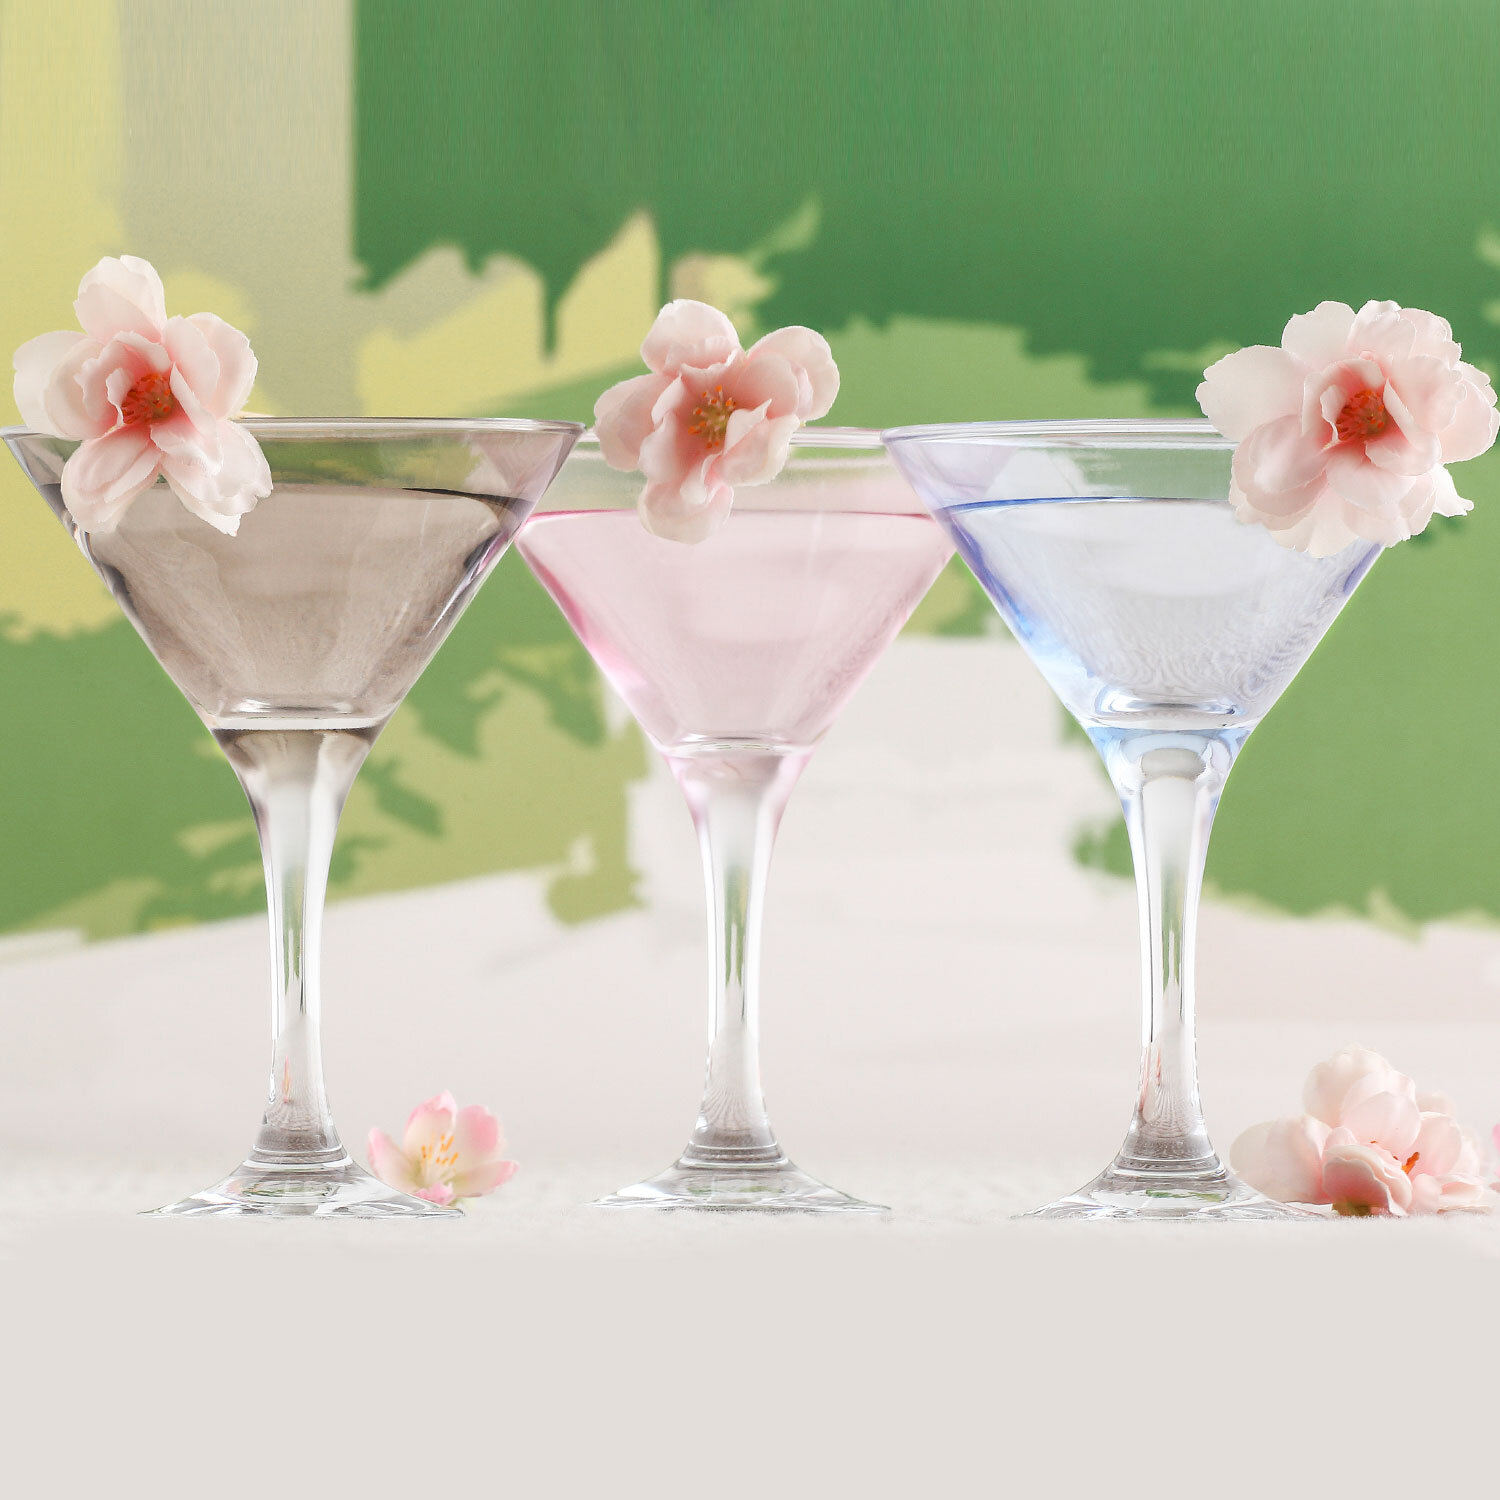 Martini Glass x 2 6oz, Clear | Bar | LSA Drinkware